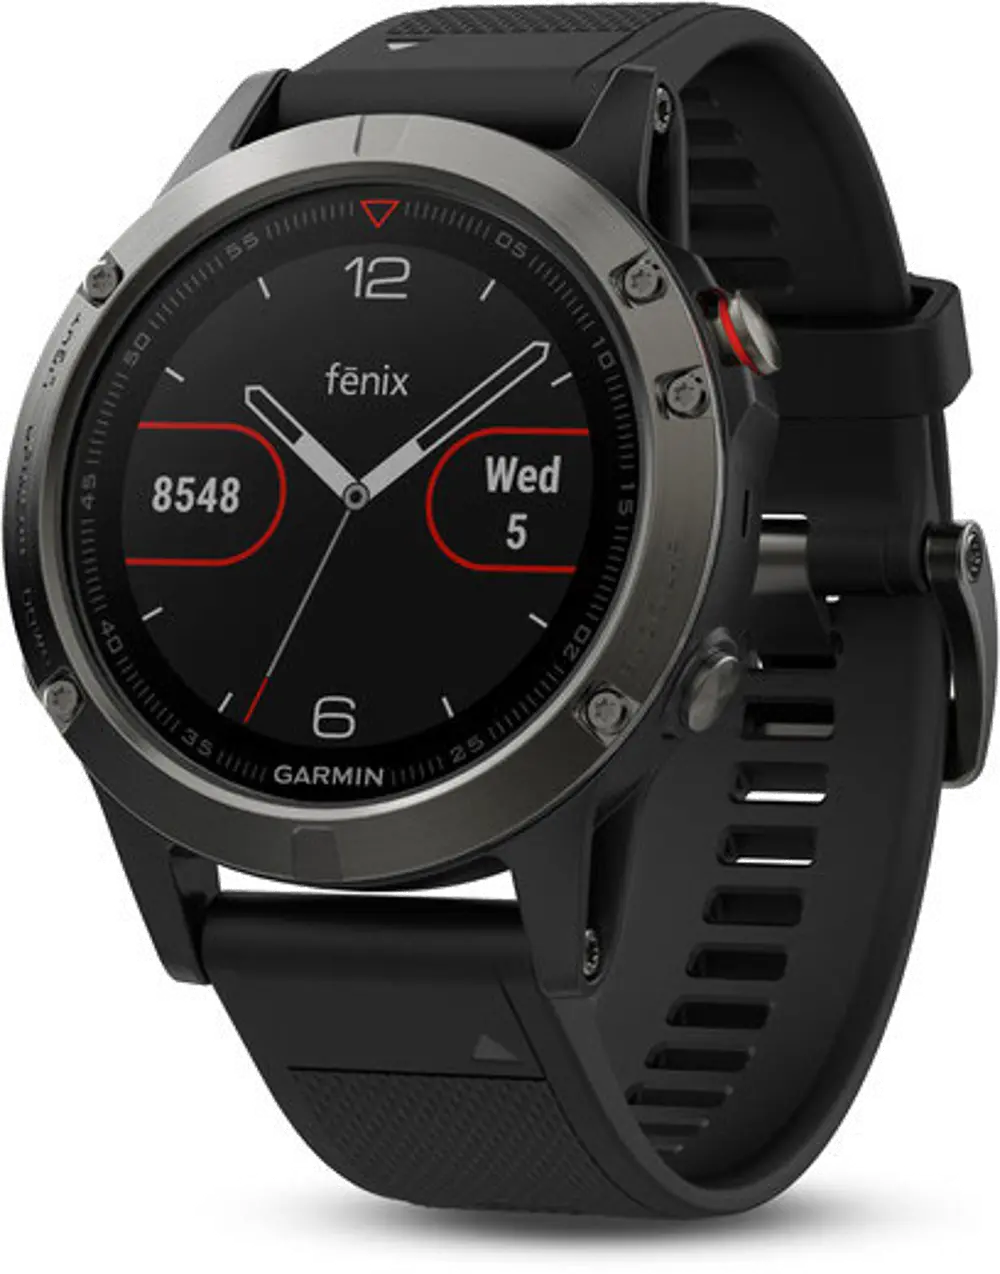 010-01688-00 Garmin fēnix 5 Outdoor GPS Watch - Slate Gray-1